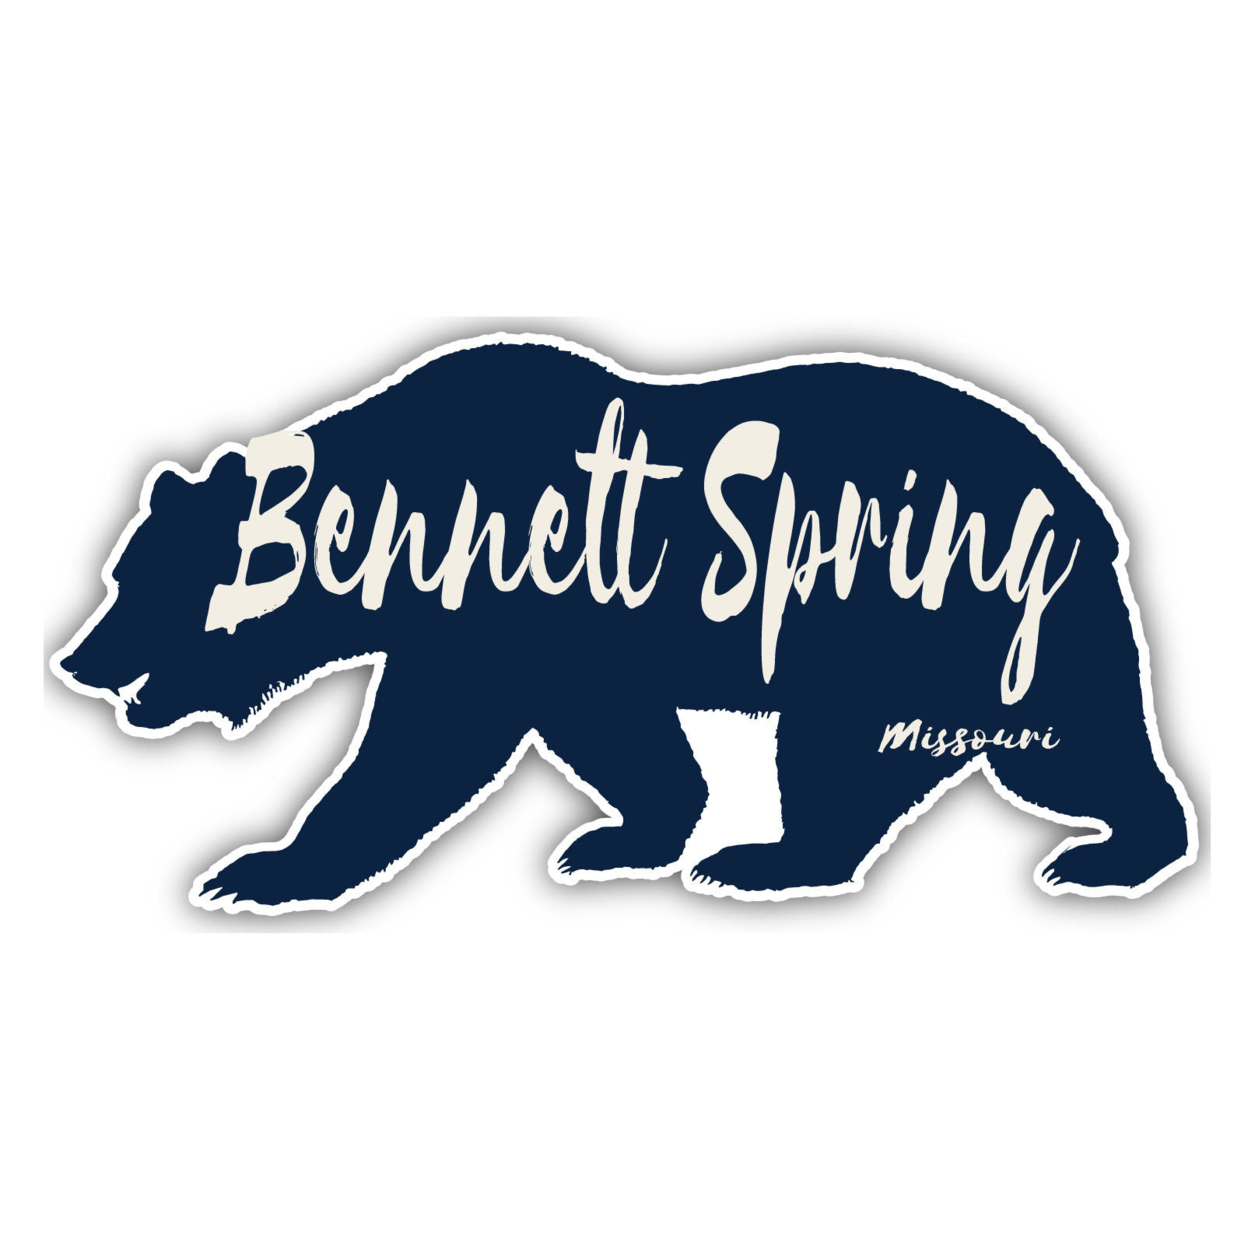 Bennett Spring Missouri Souvenir Decorative Stickers (Choose Theme And Size) - Single Unit, 6-Inch, Bear